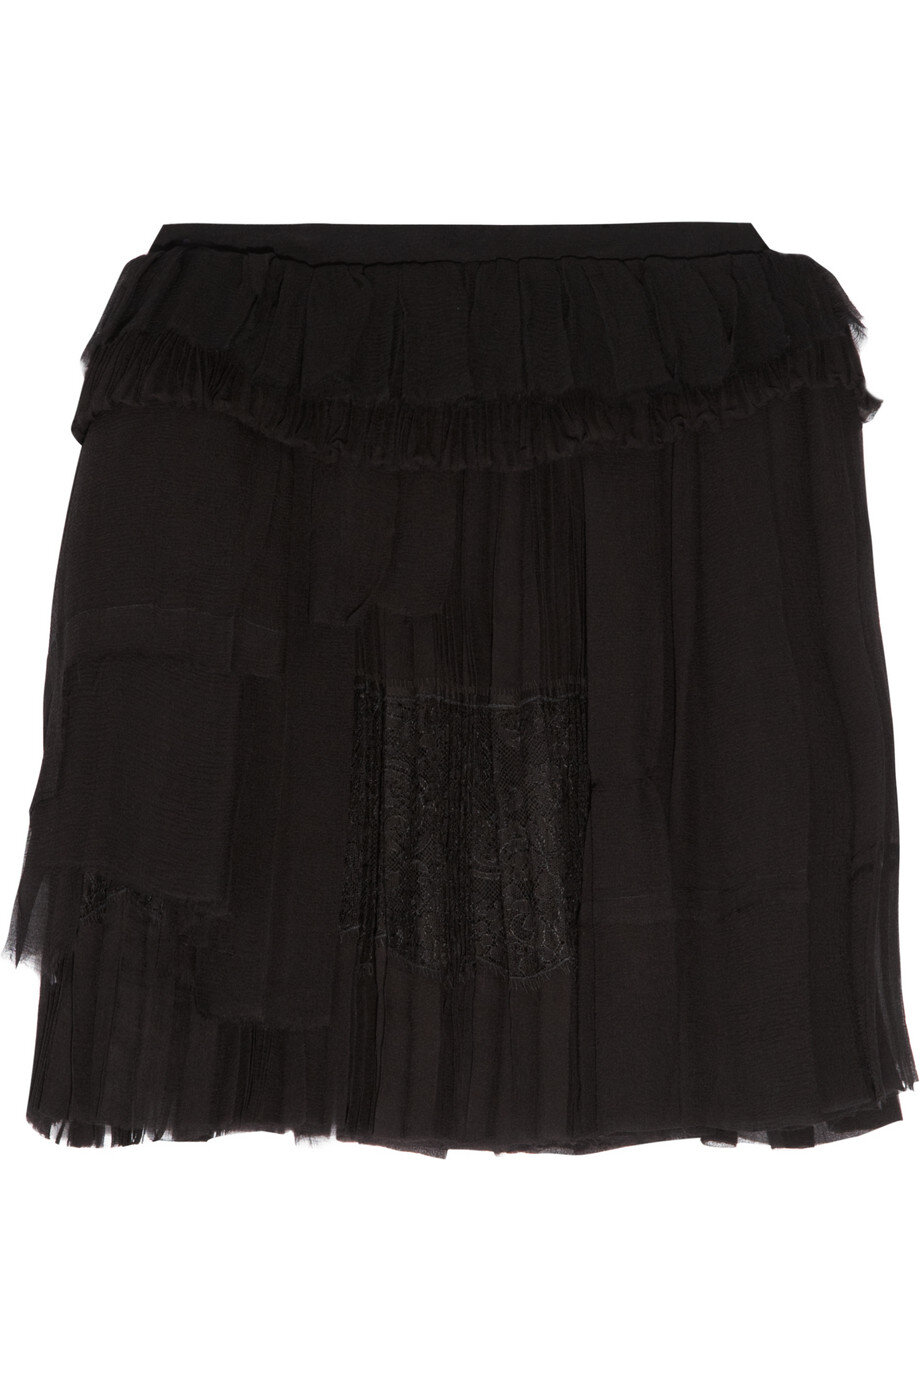 Nina Ricci Tiered Silk-Chiffon Skirt.jpg